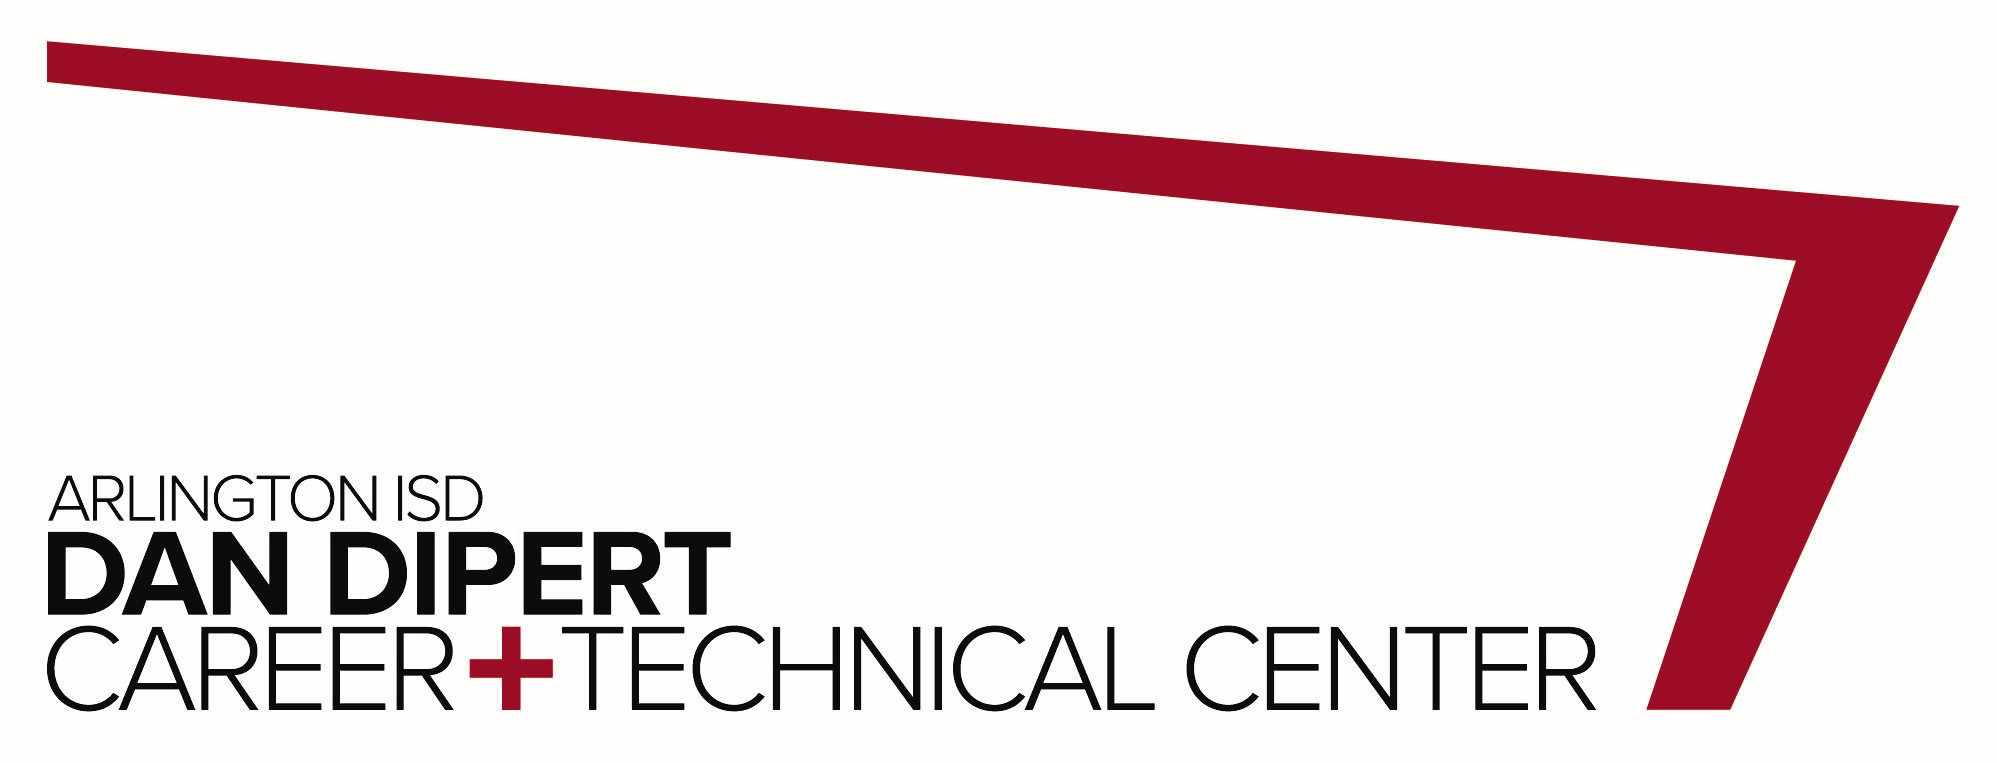 CTC logo.jpg